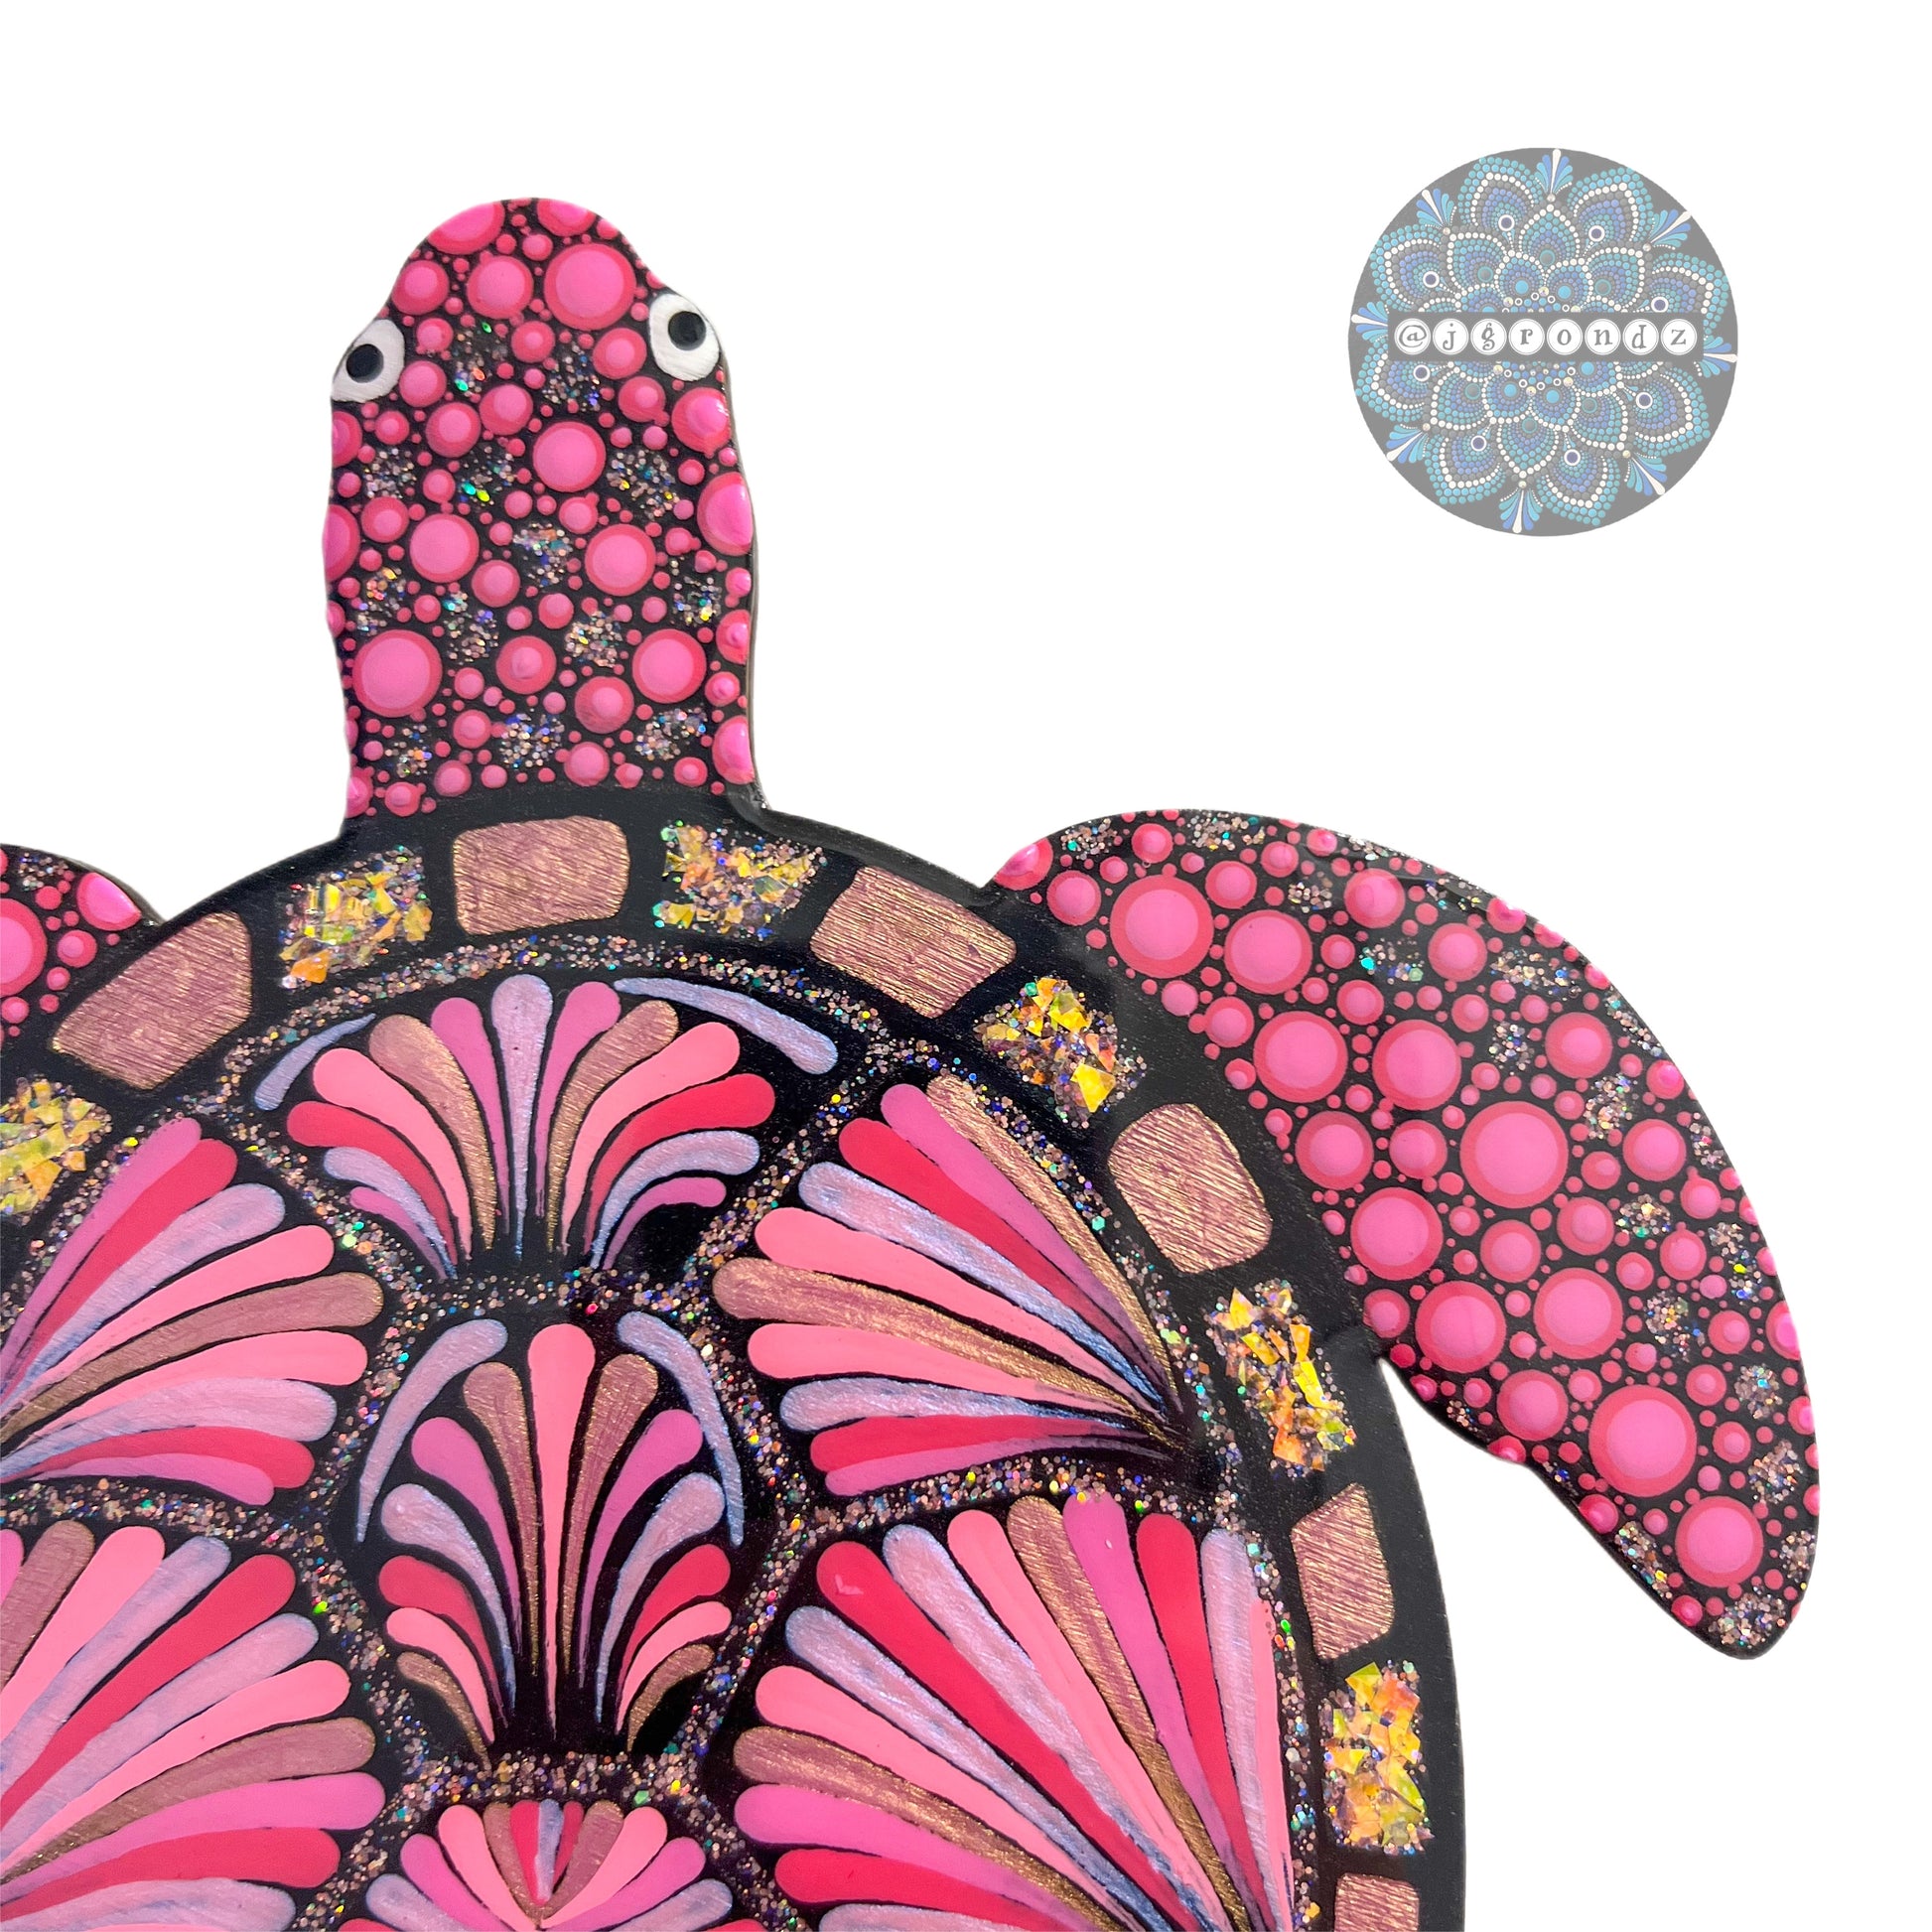 Sea Turtle Resin & Dot Art – Jgrondz Dot Art